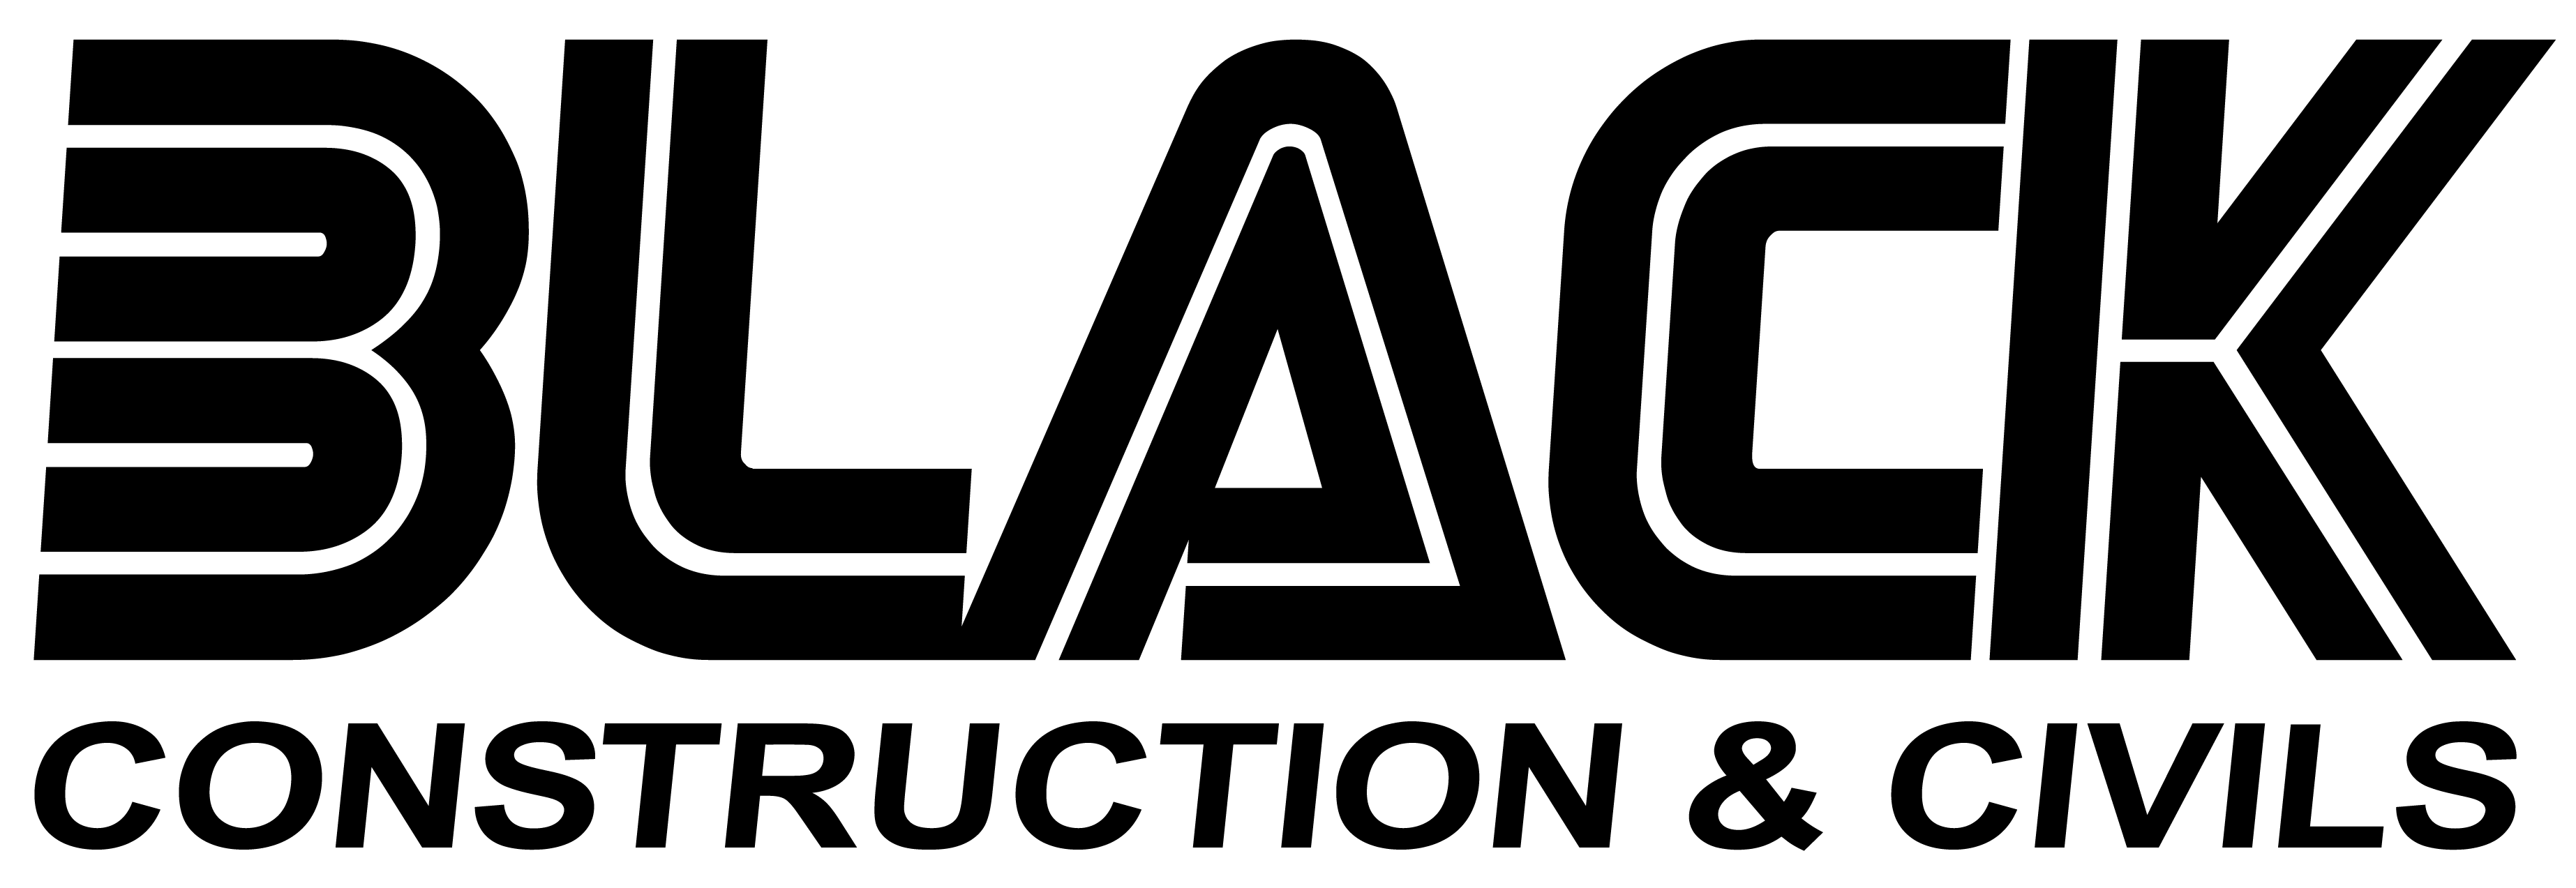 Black Construction and Civils Logo